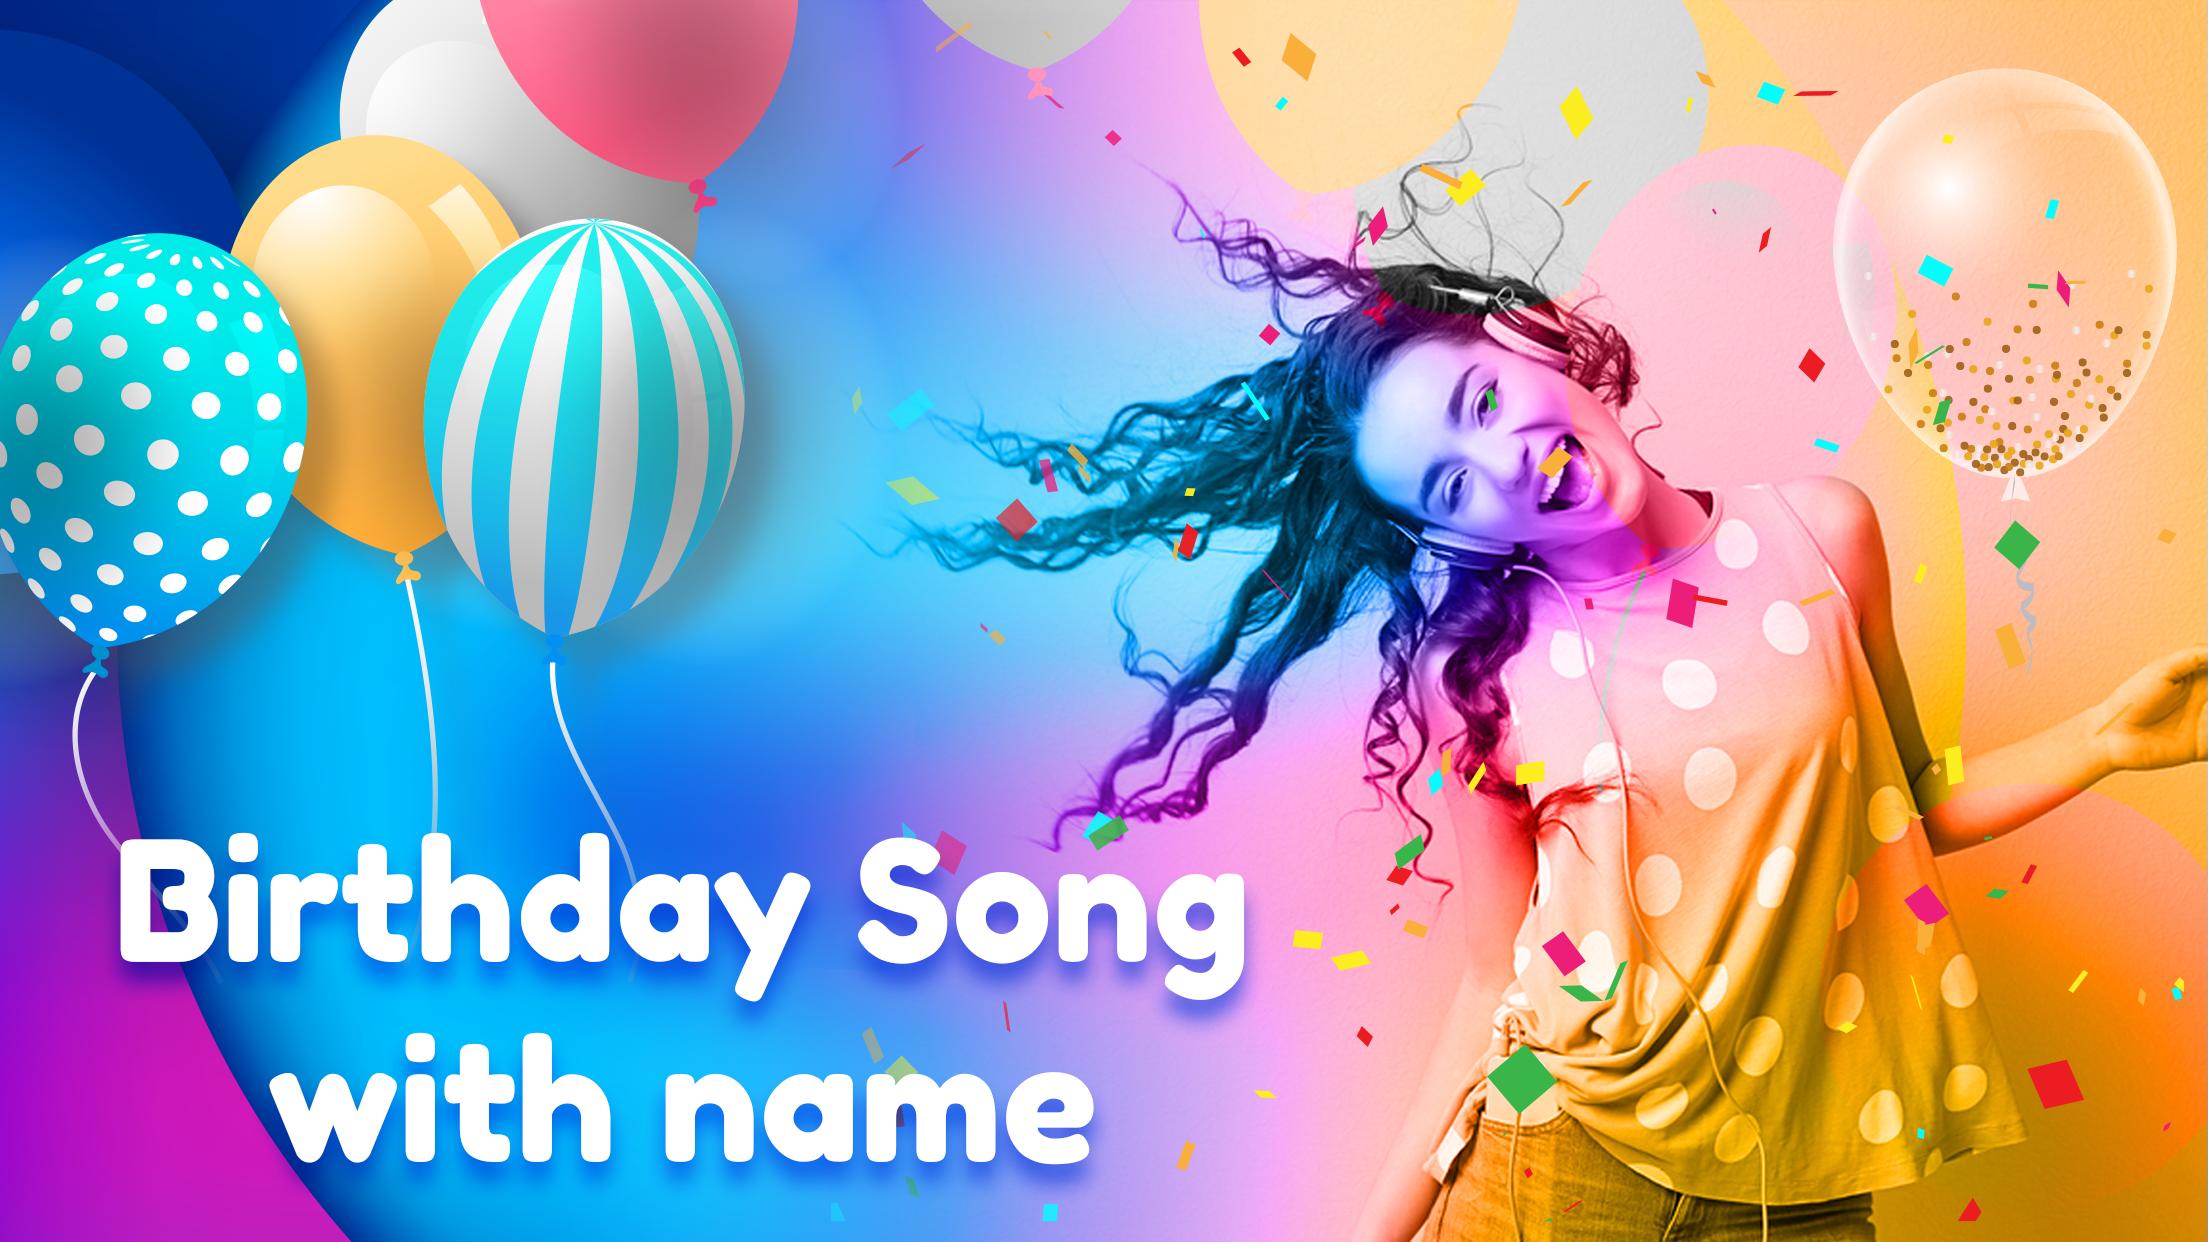 Песни про день рождения mp3. Birthday Song. Happy Birthday песня слушать. 1 Happy Birthday Song with name and photo. Включи Happy Birthday Song.